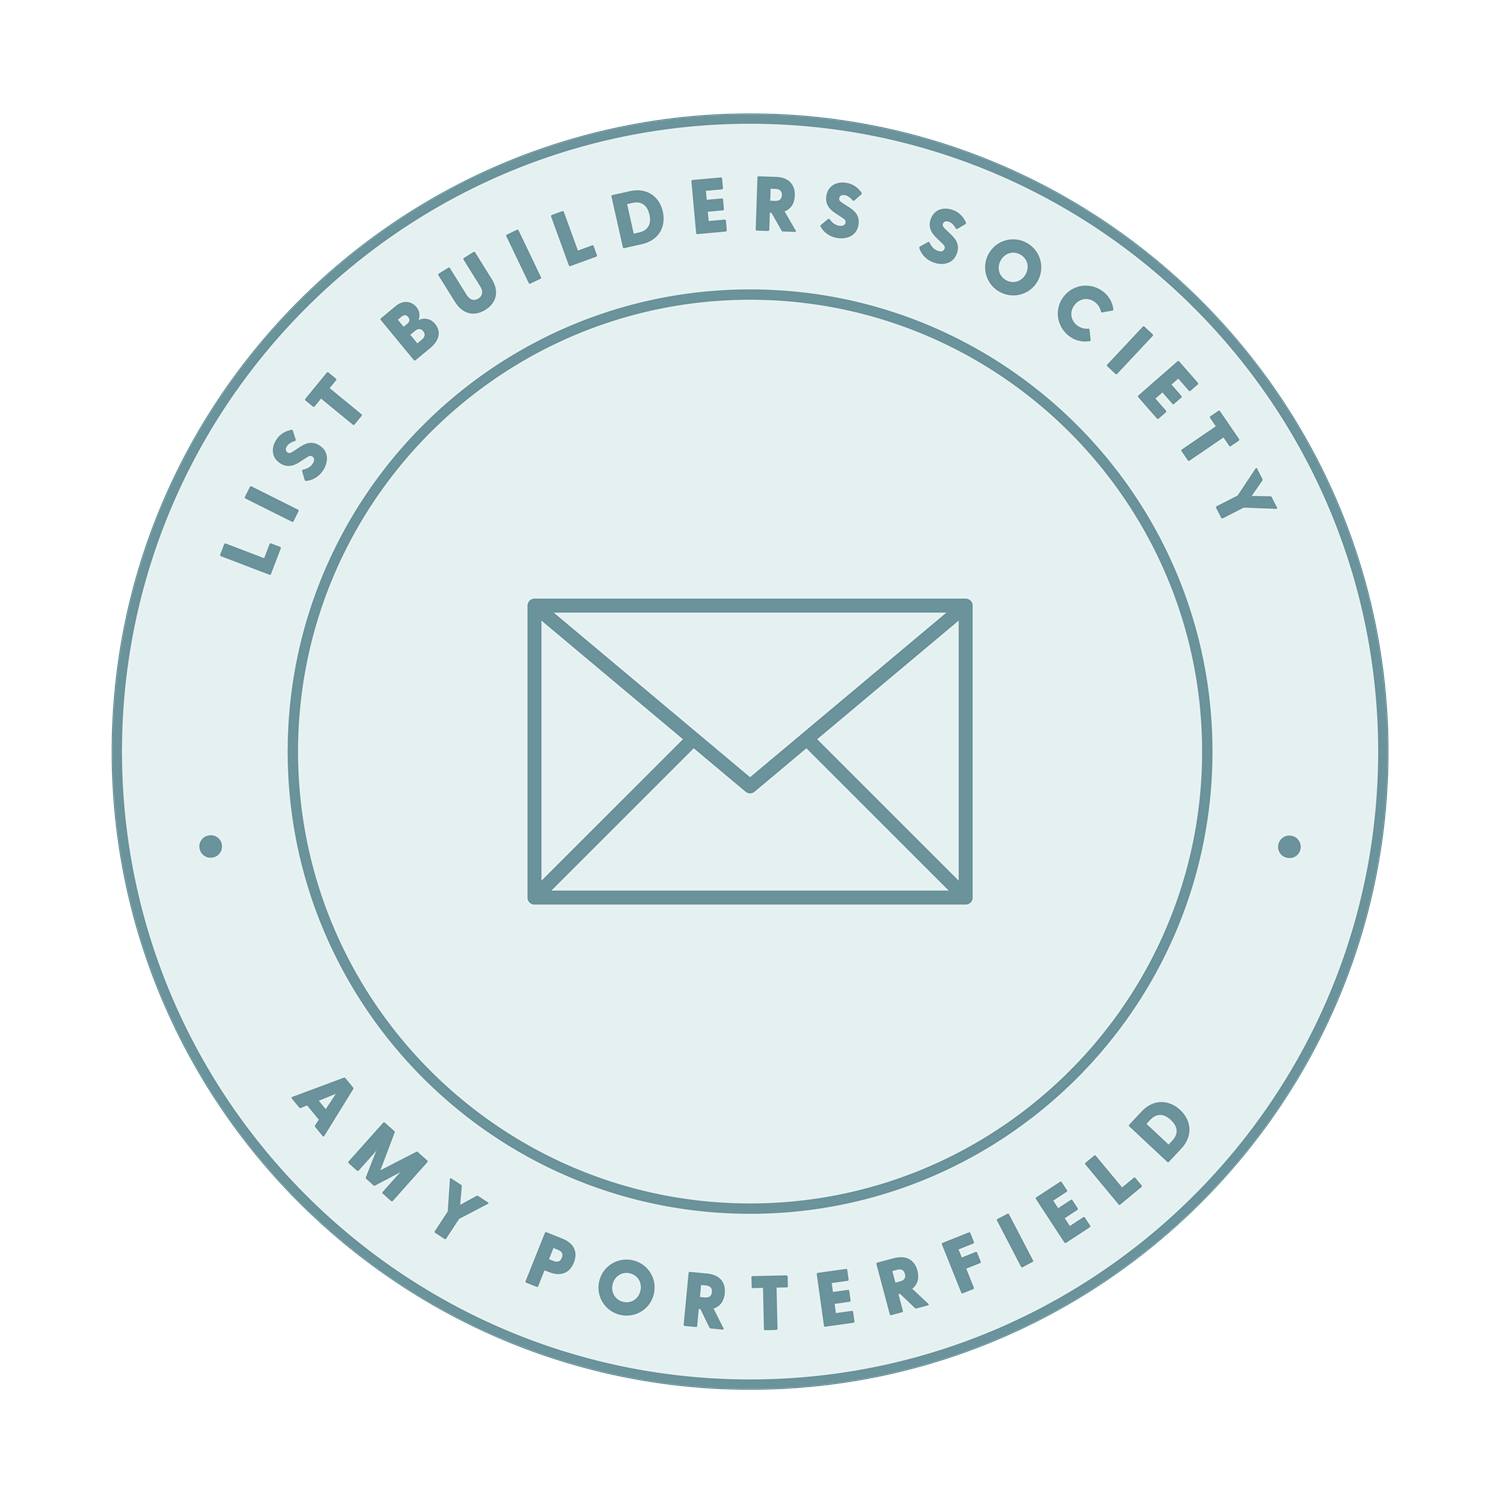 List Builder's Society